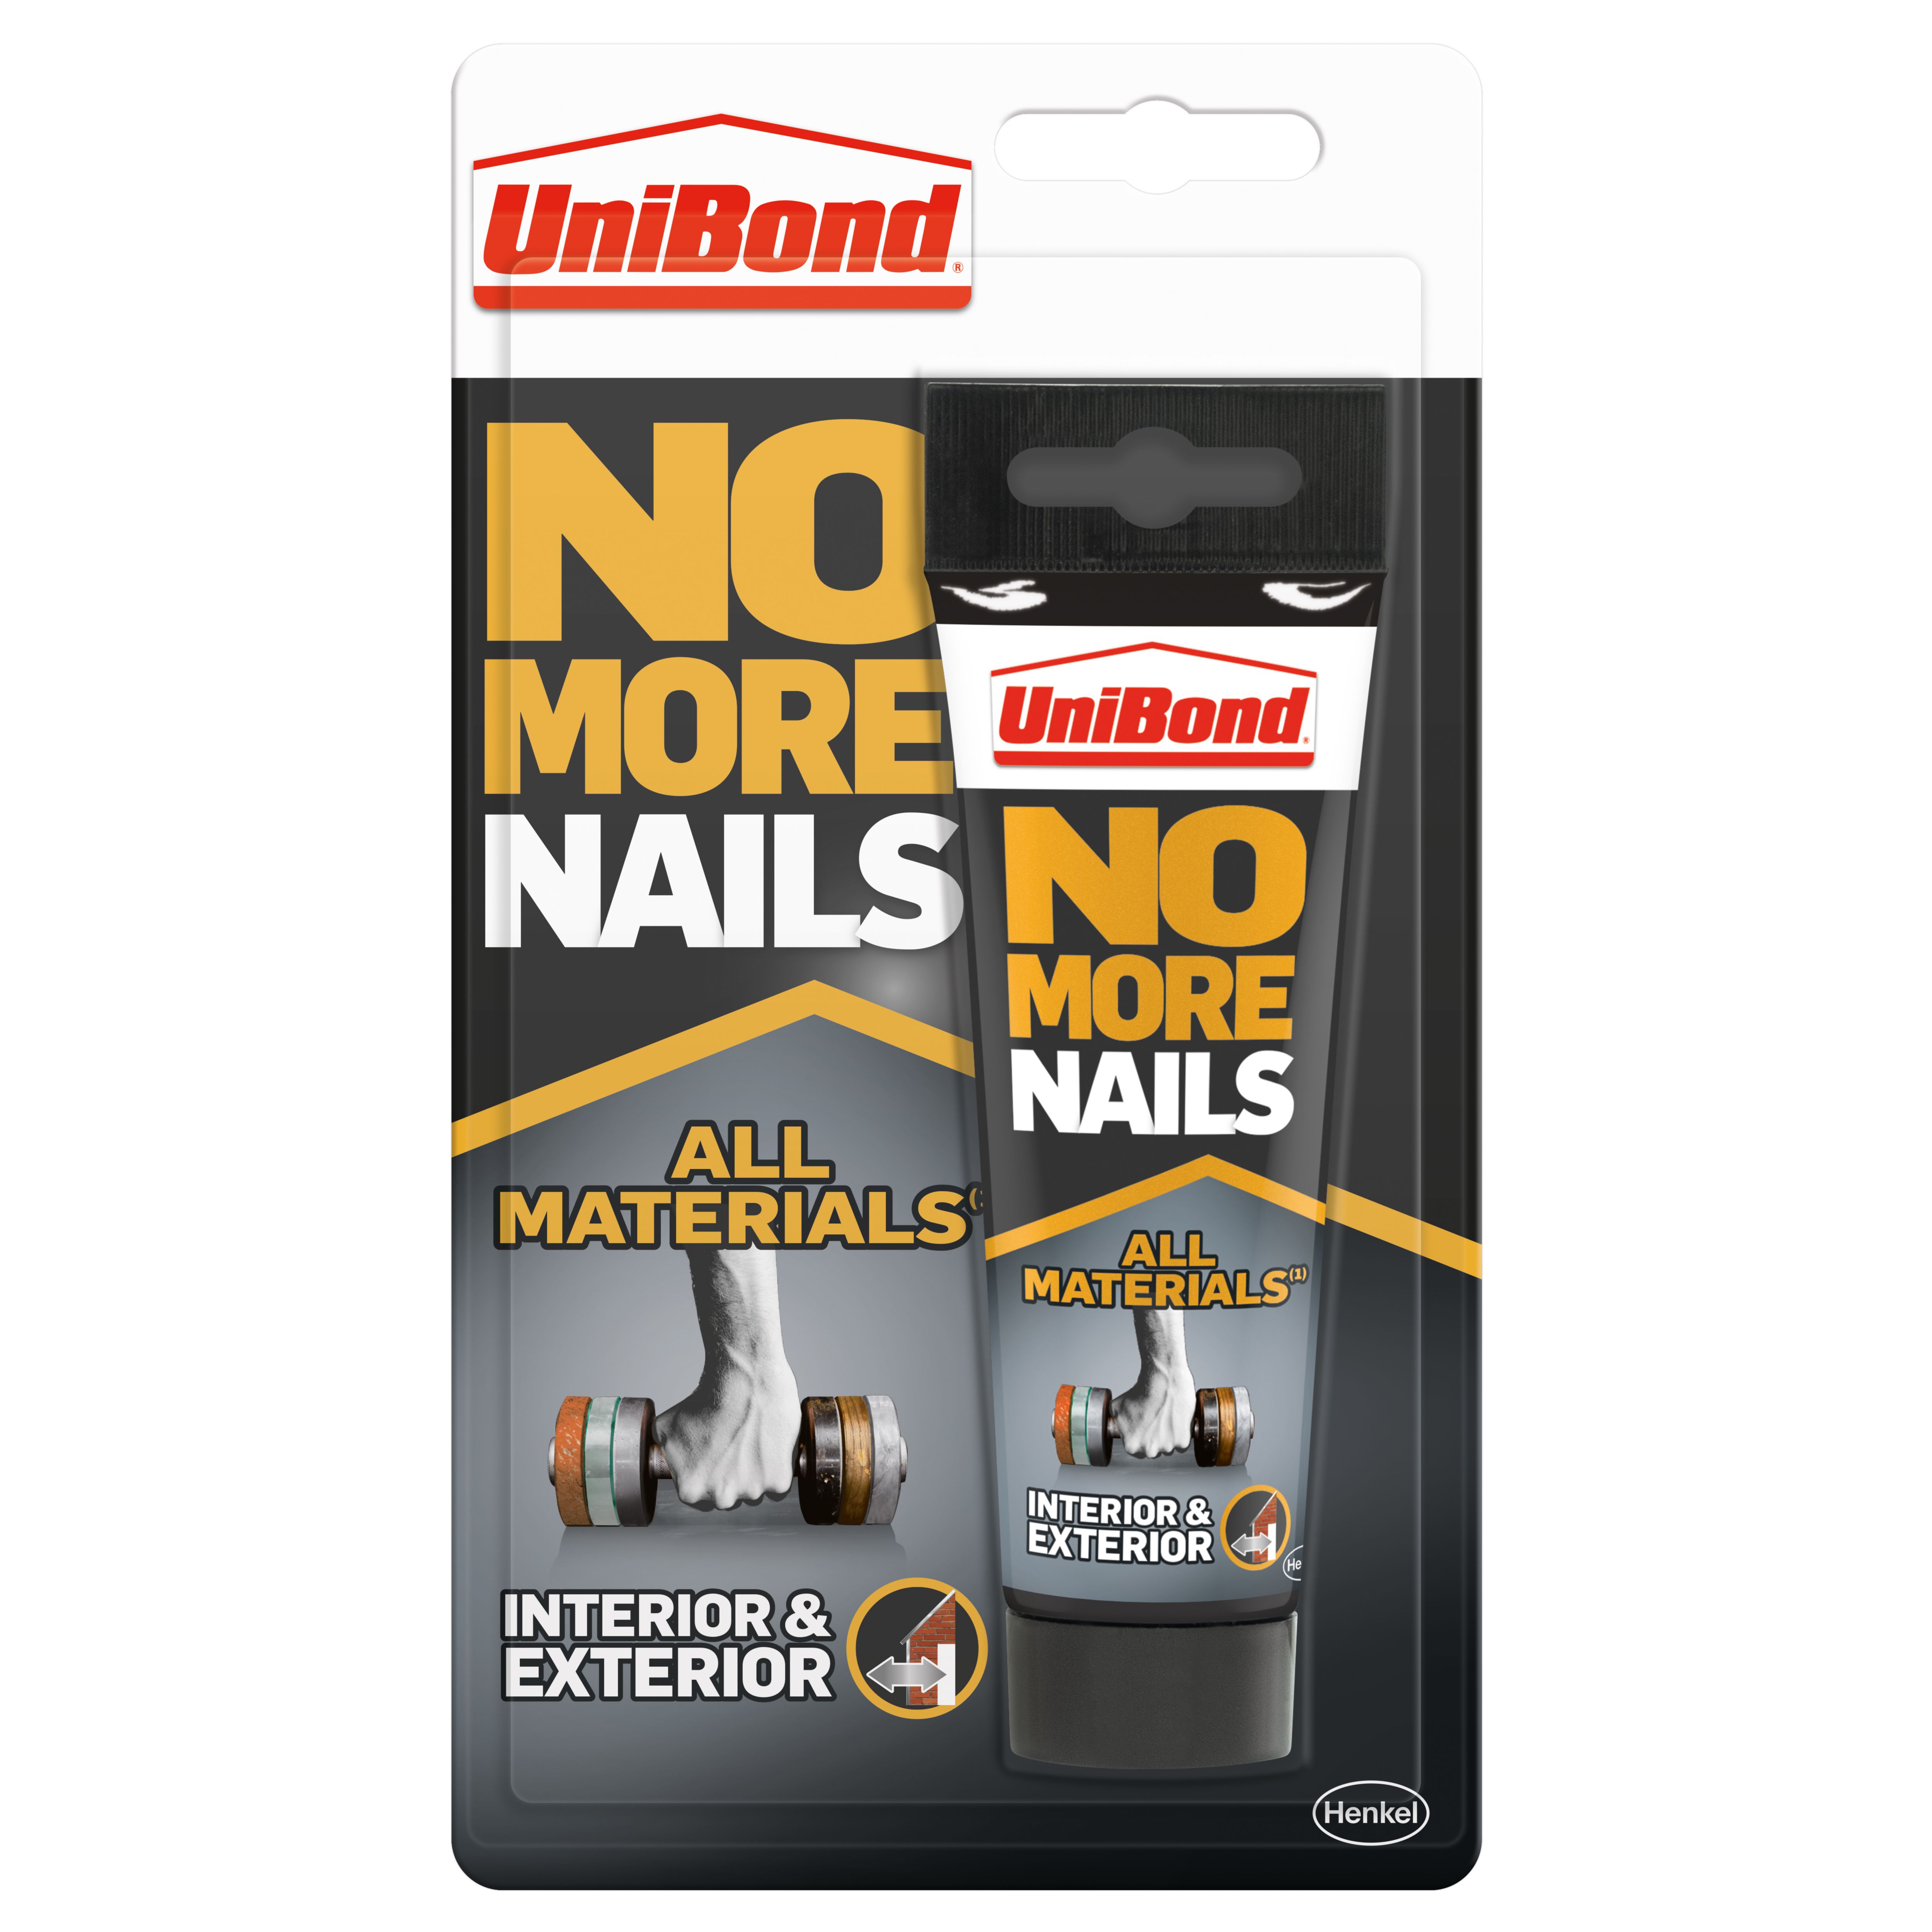 UniBond No More Nails Interior & Exterior Solvent-free White All materials Grab adhesive 142ml